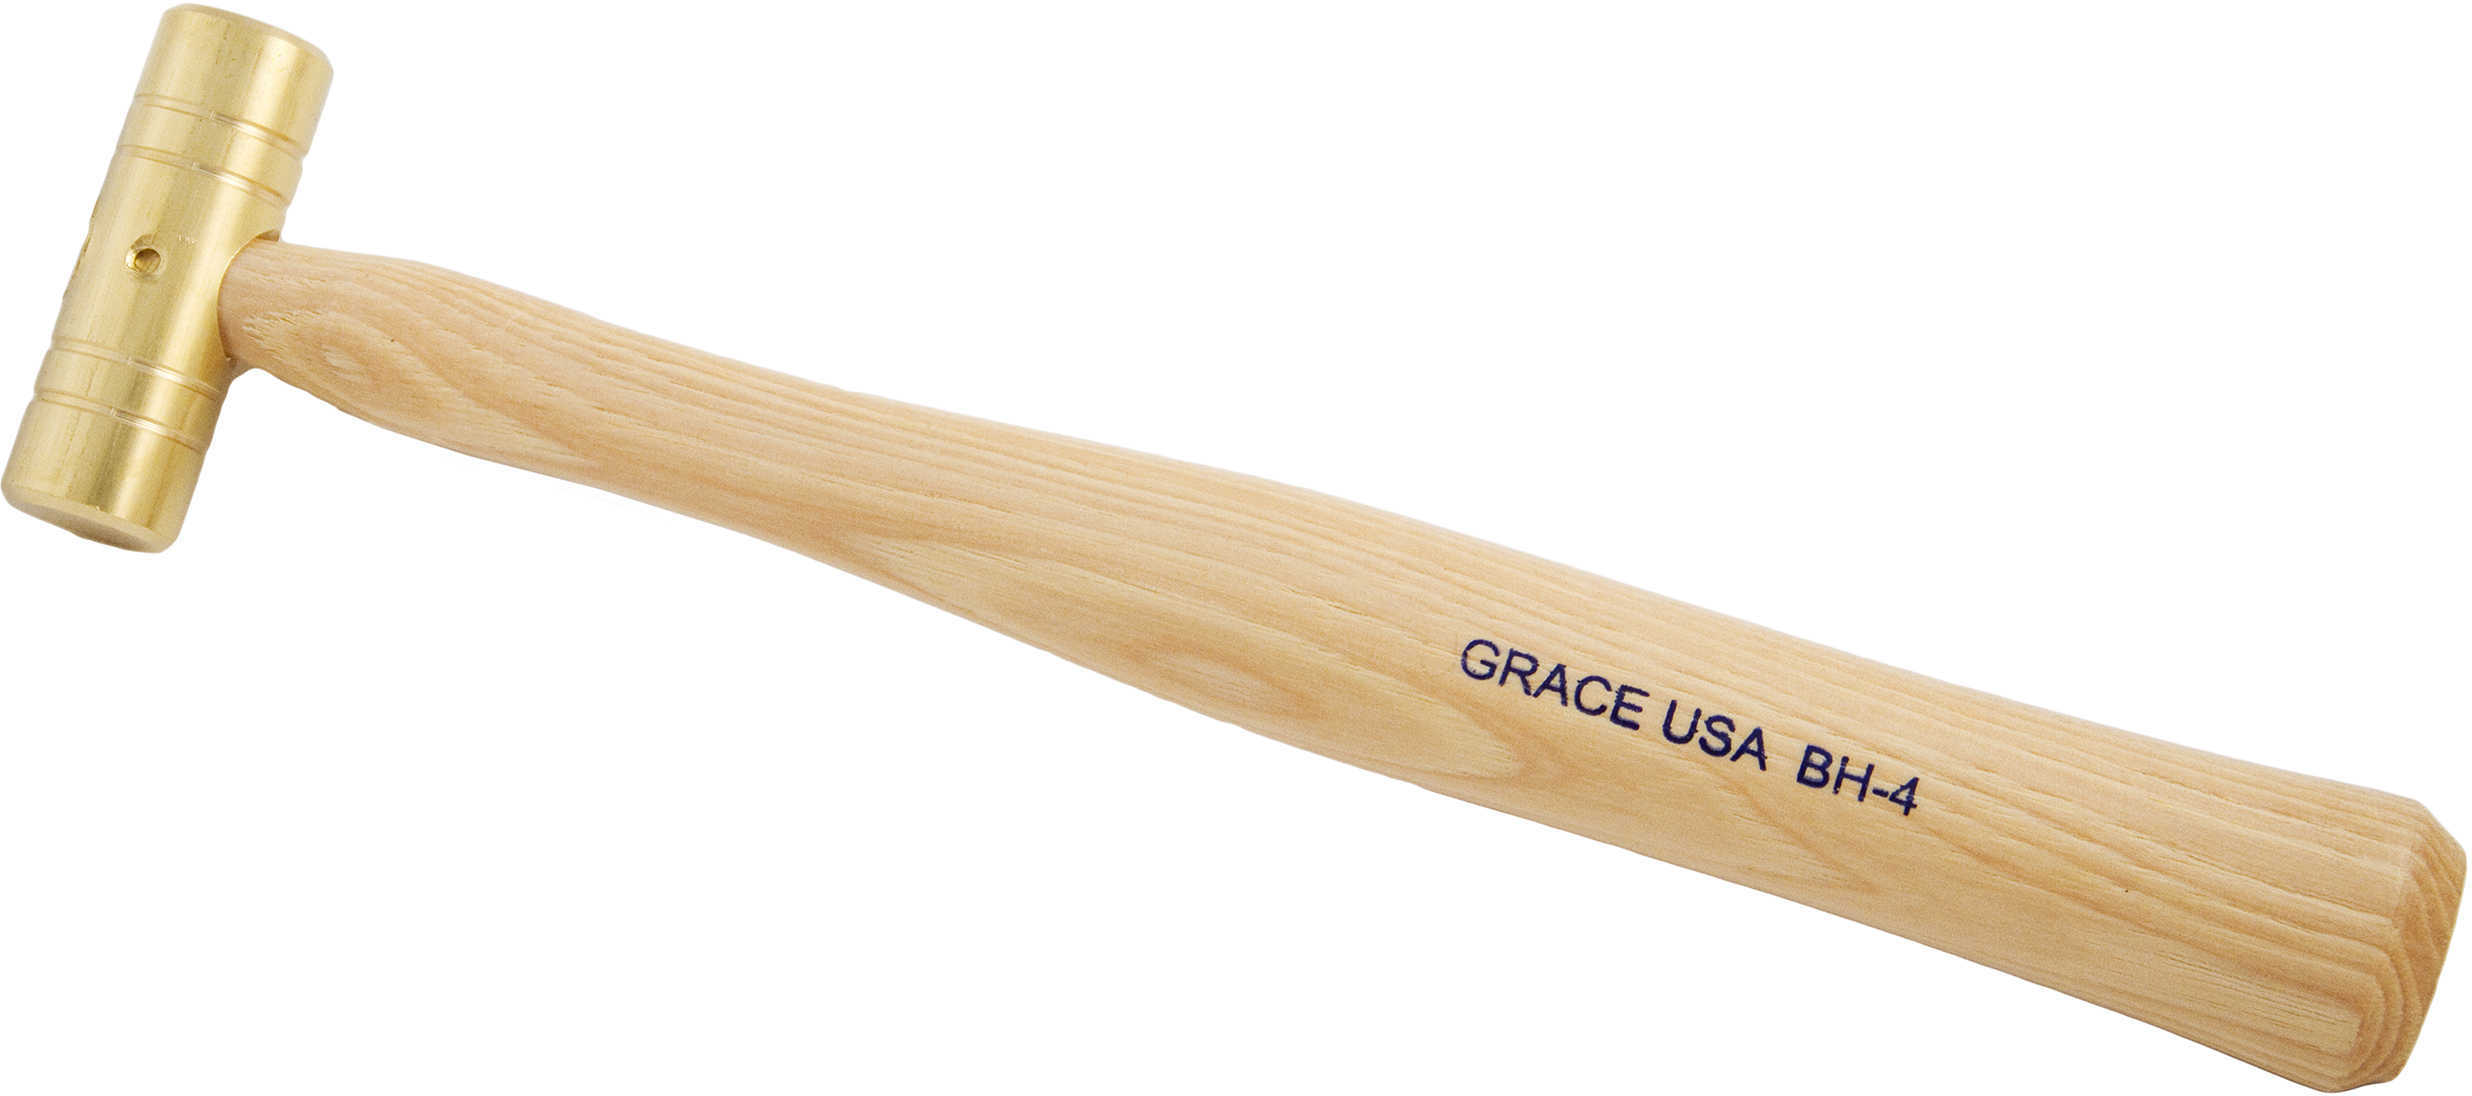 Grace USA Tools Hammer 4 Oz Brass